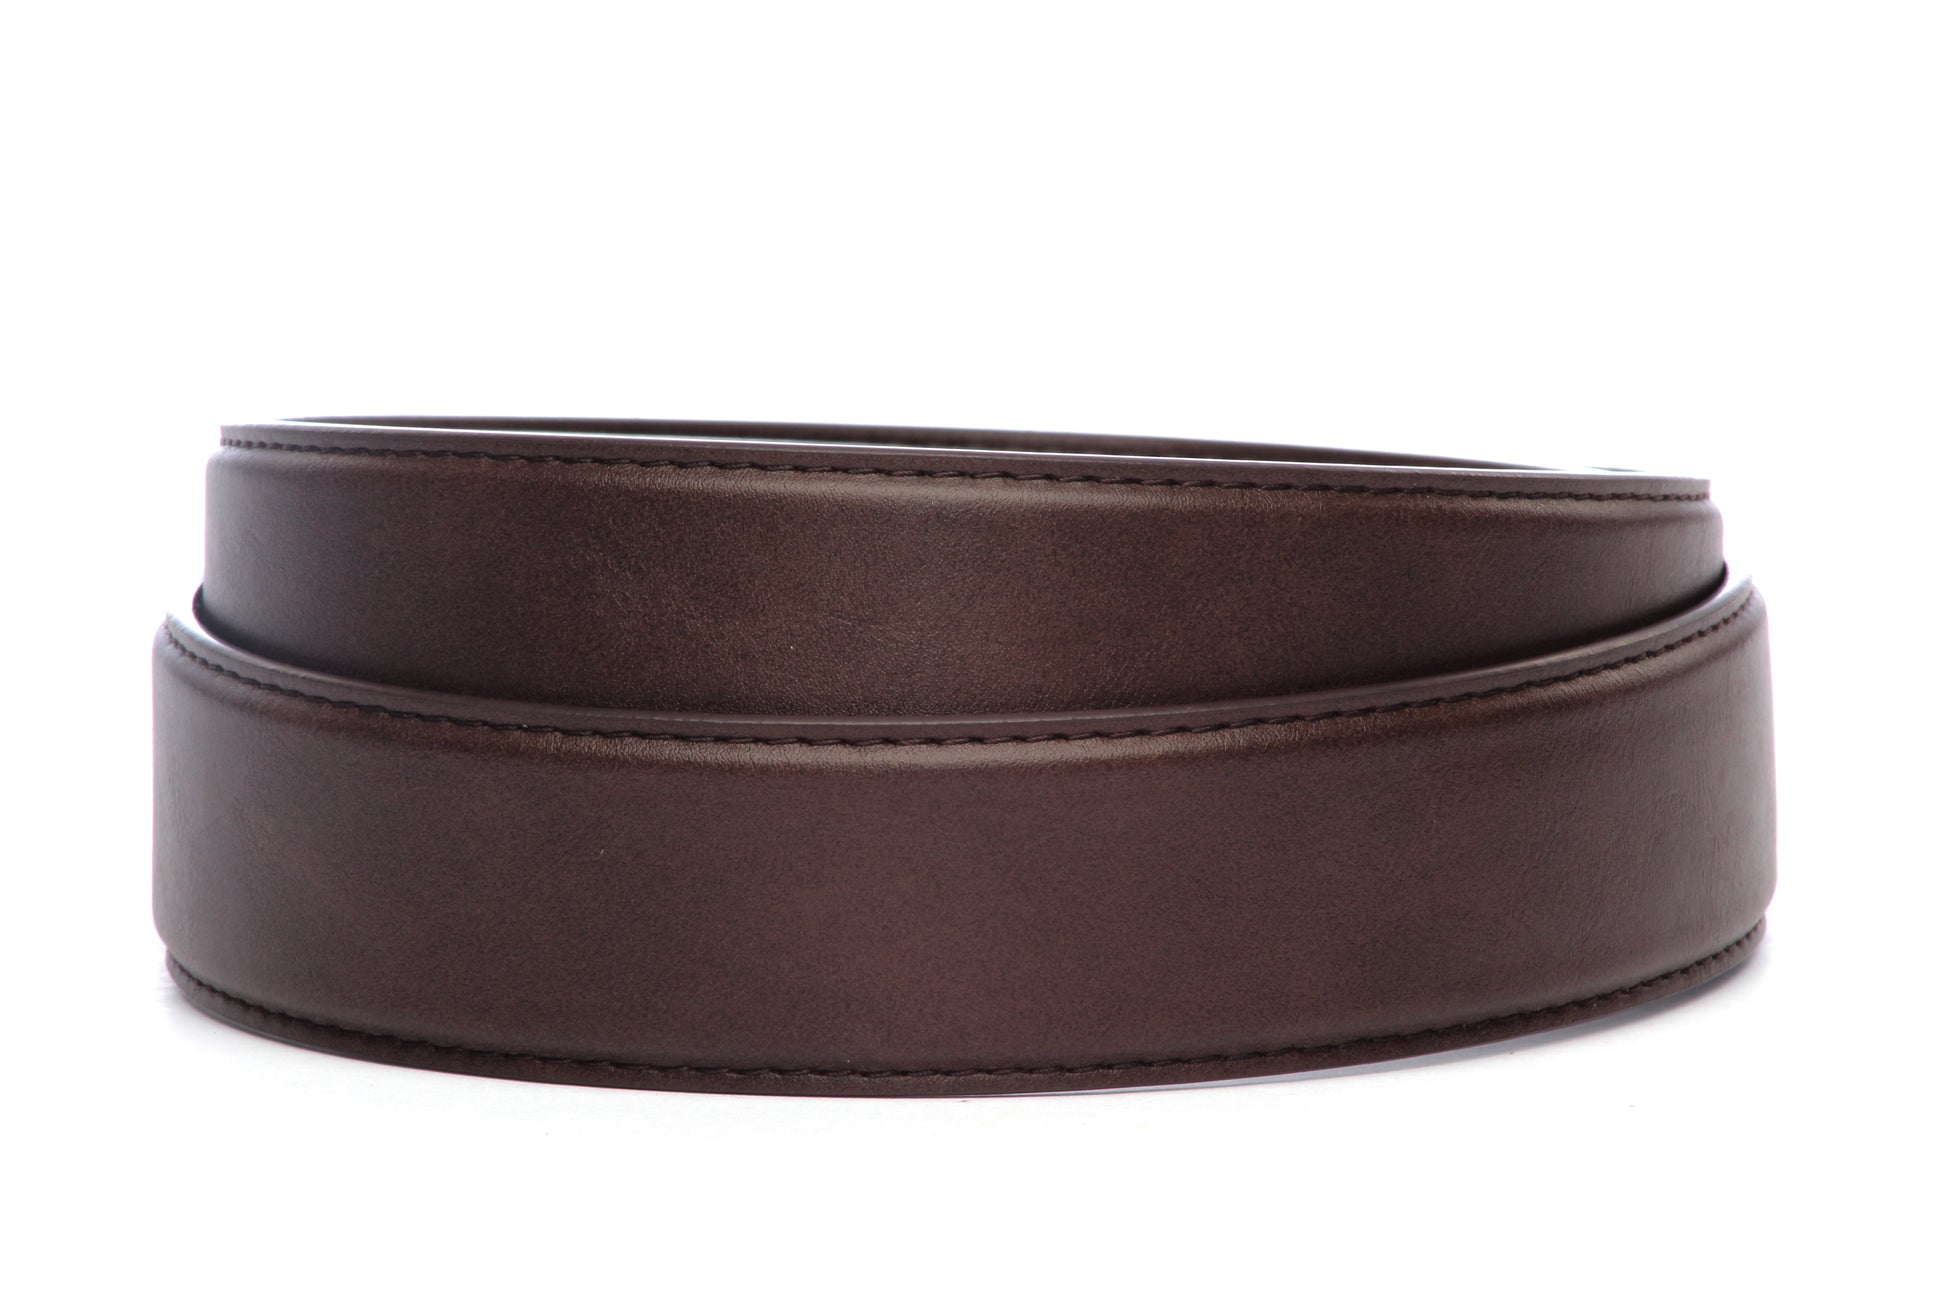 Men's XL vegan microfiber belt strap in dark brown, 1.5 inches wide, formal look